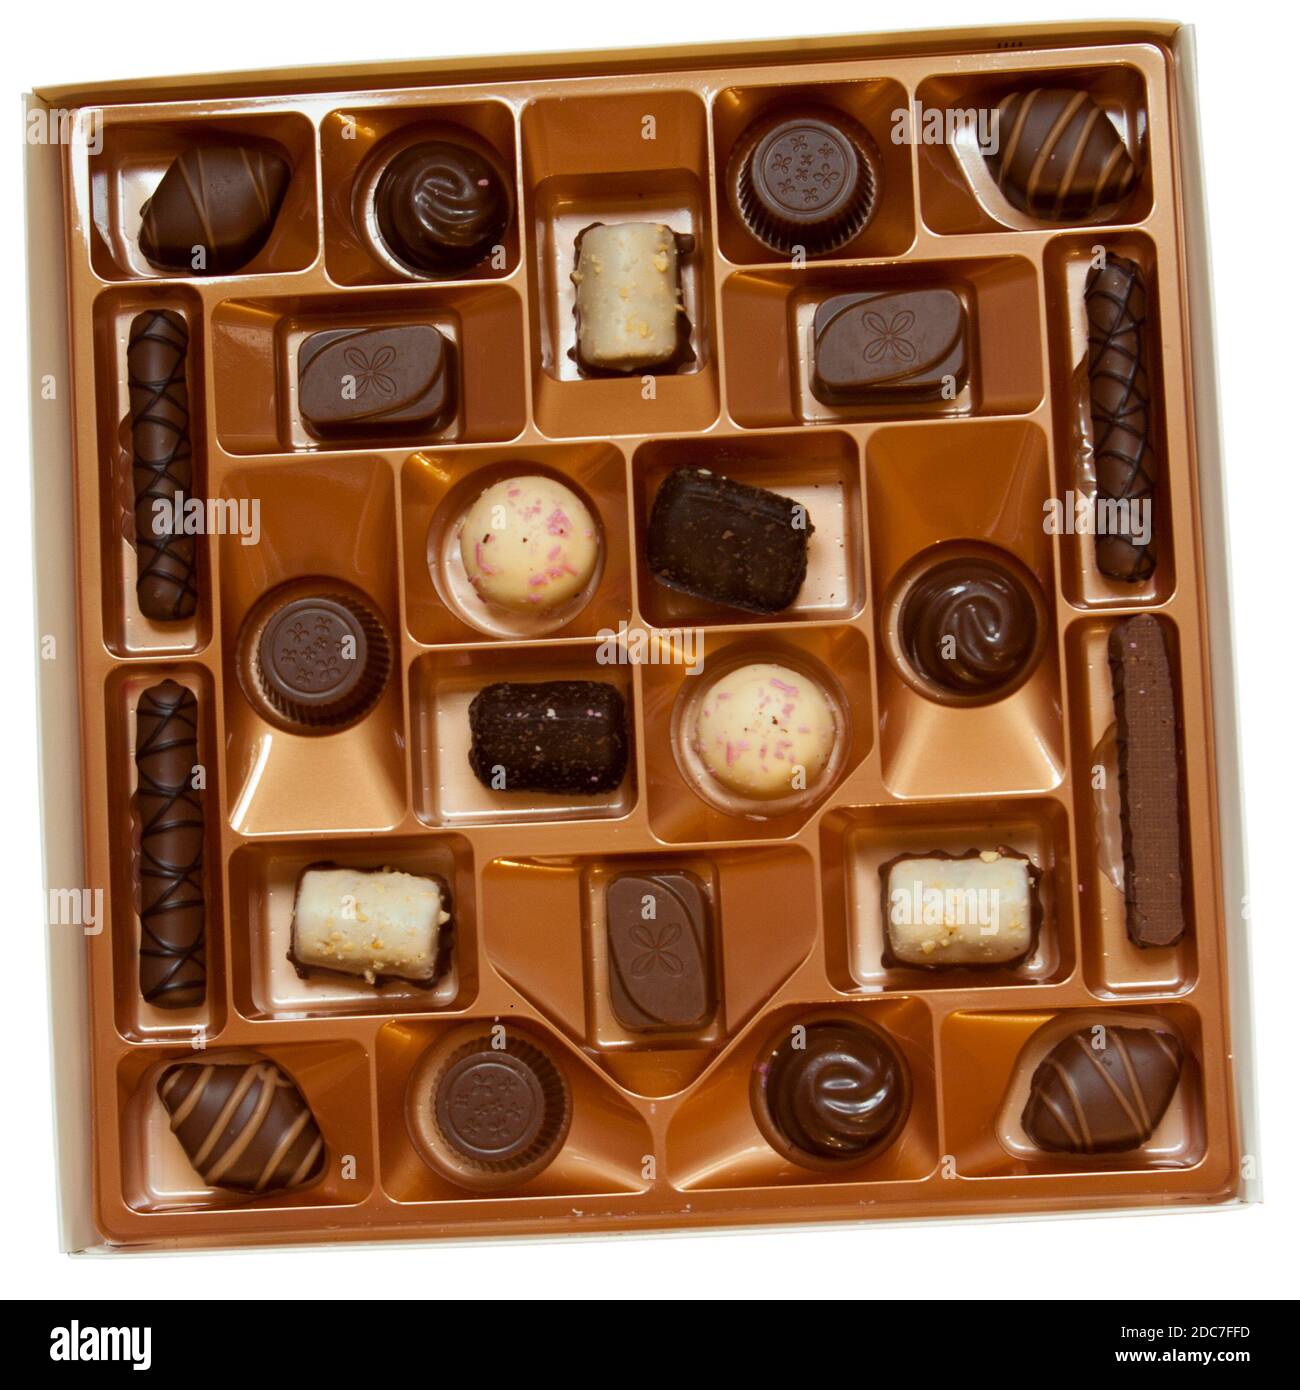 Open Box Of Thorntons Classic Chocolates Stock Photo